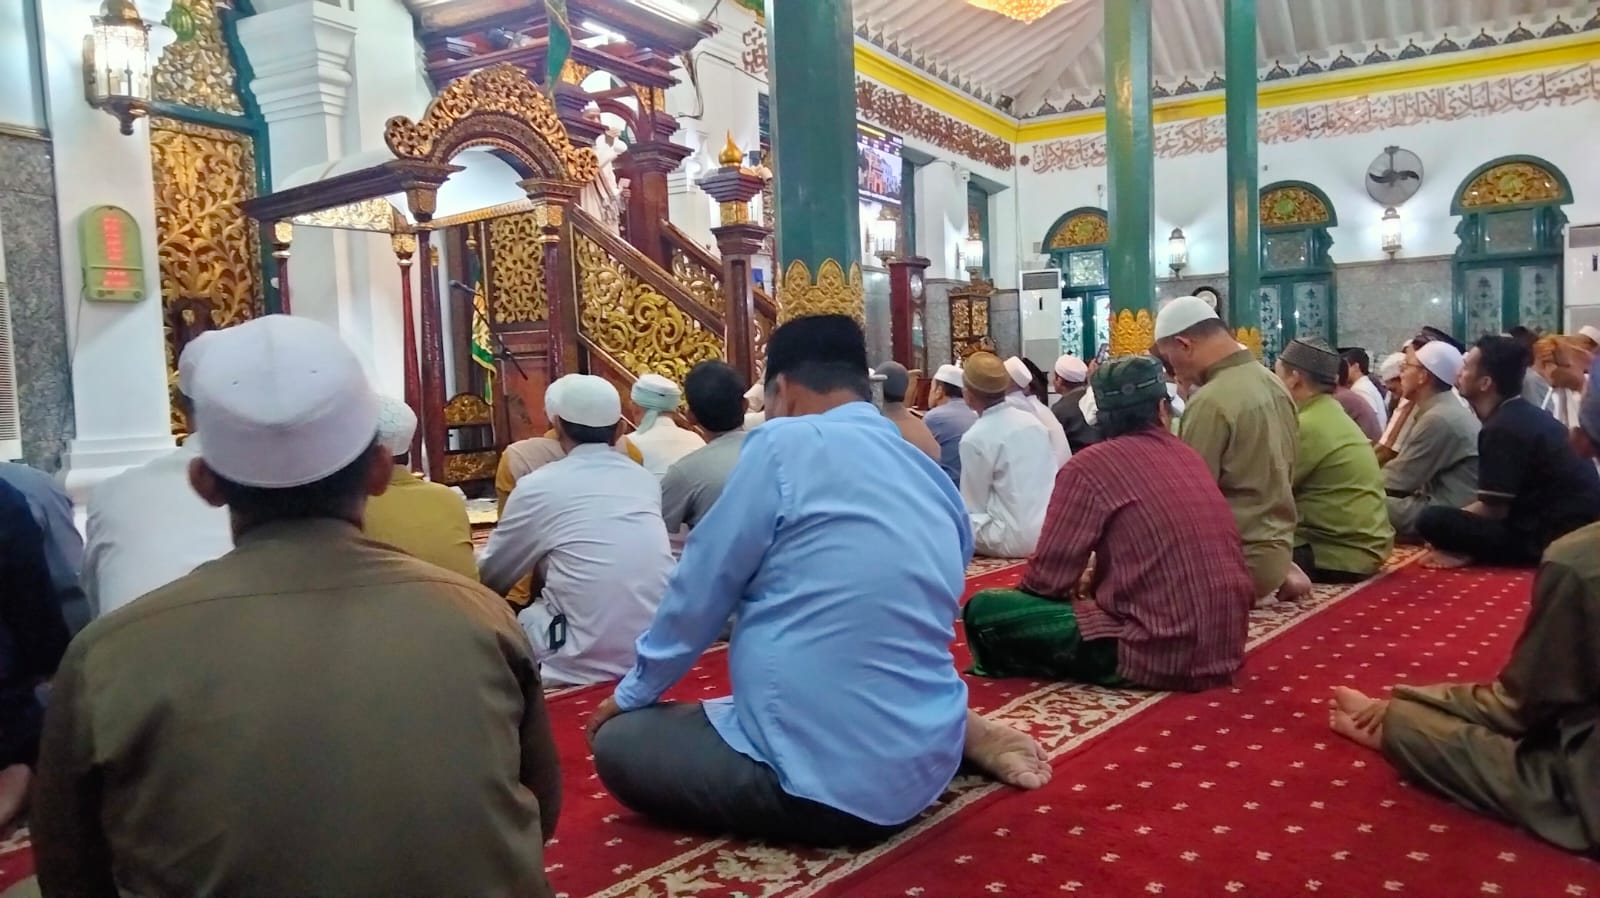 Jemaah Masjid Agung Kota Palembang, Sumsel, Melaksanakan Salat Gerhana